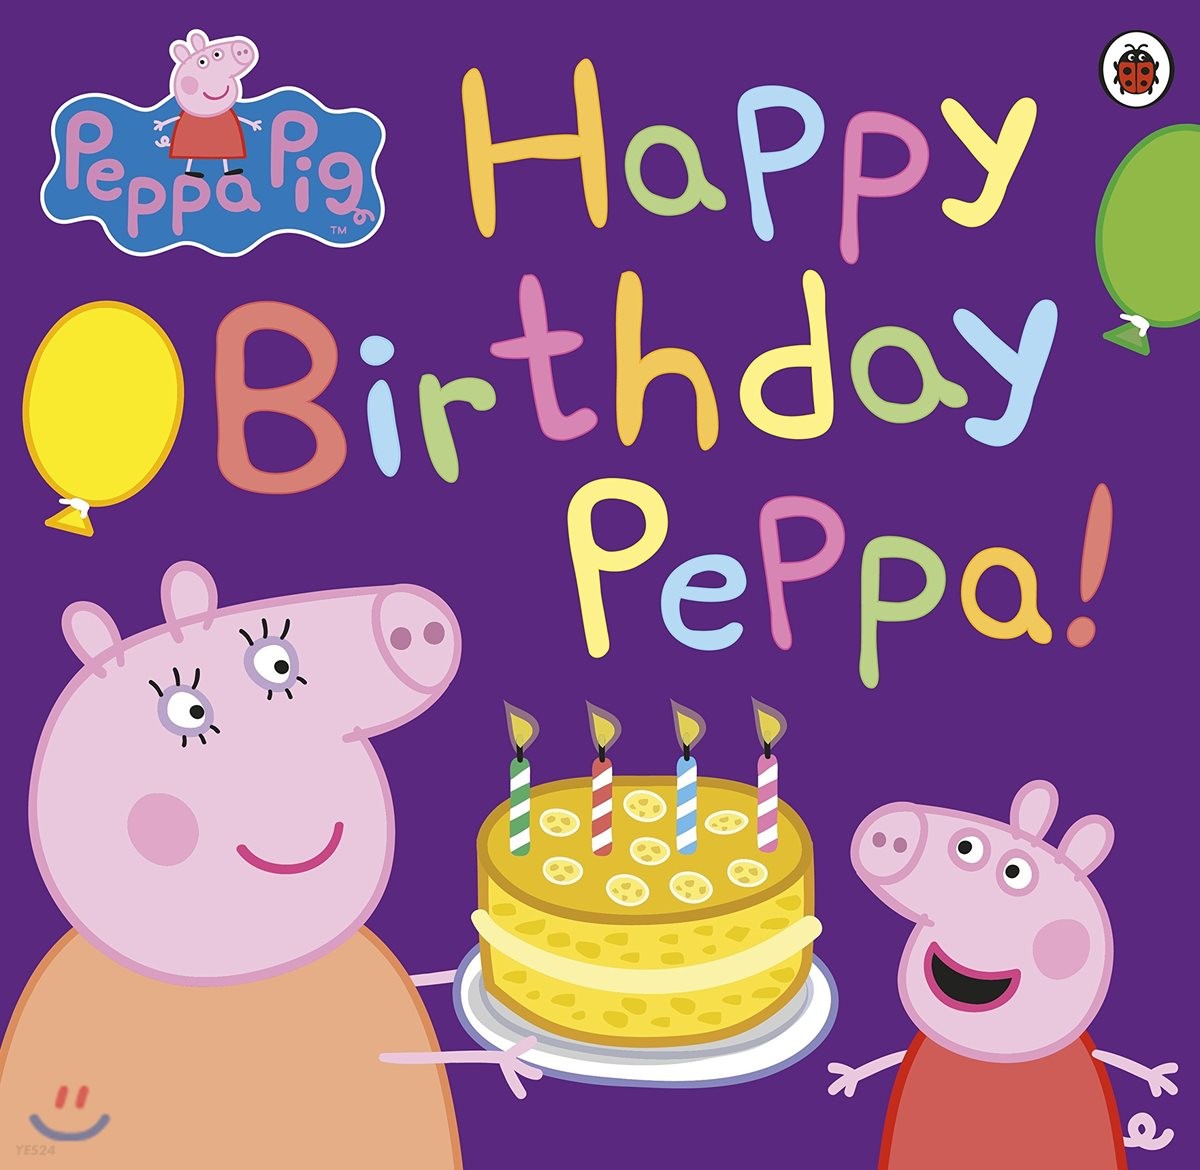 Happy Birthday PePPa!